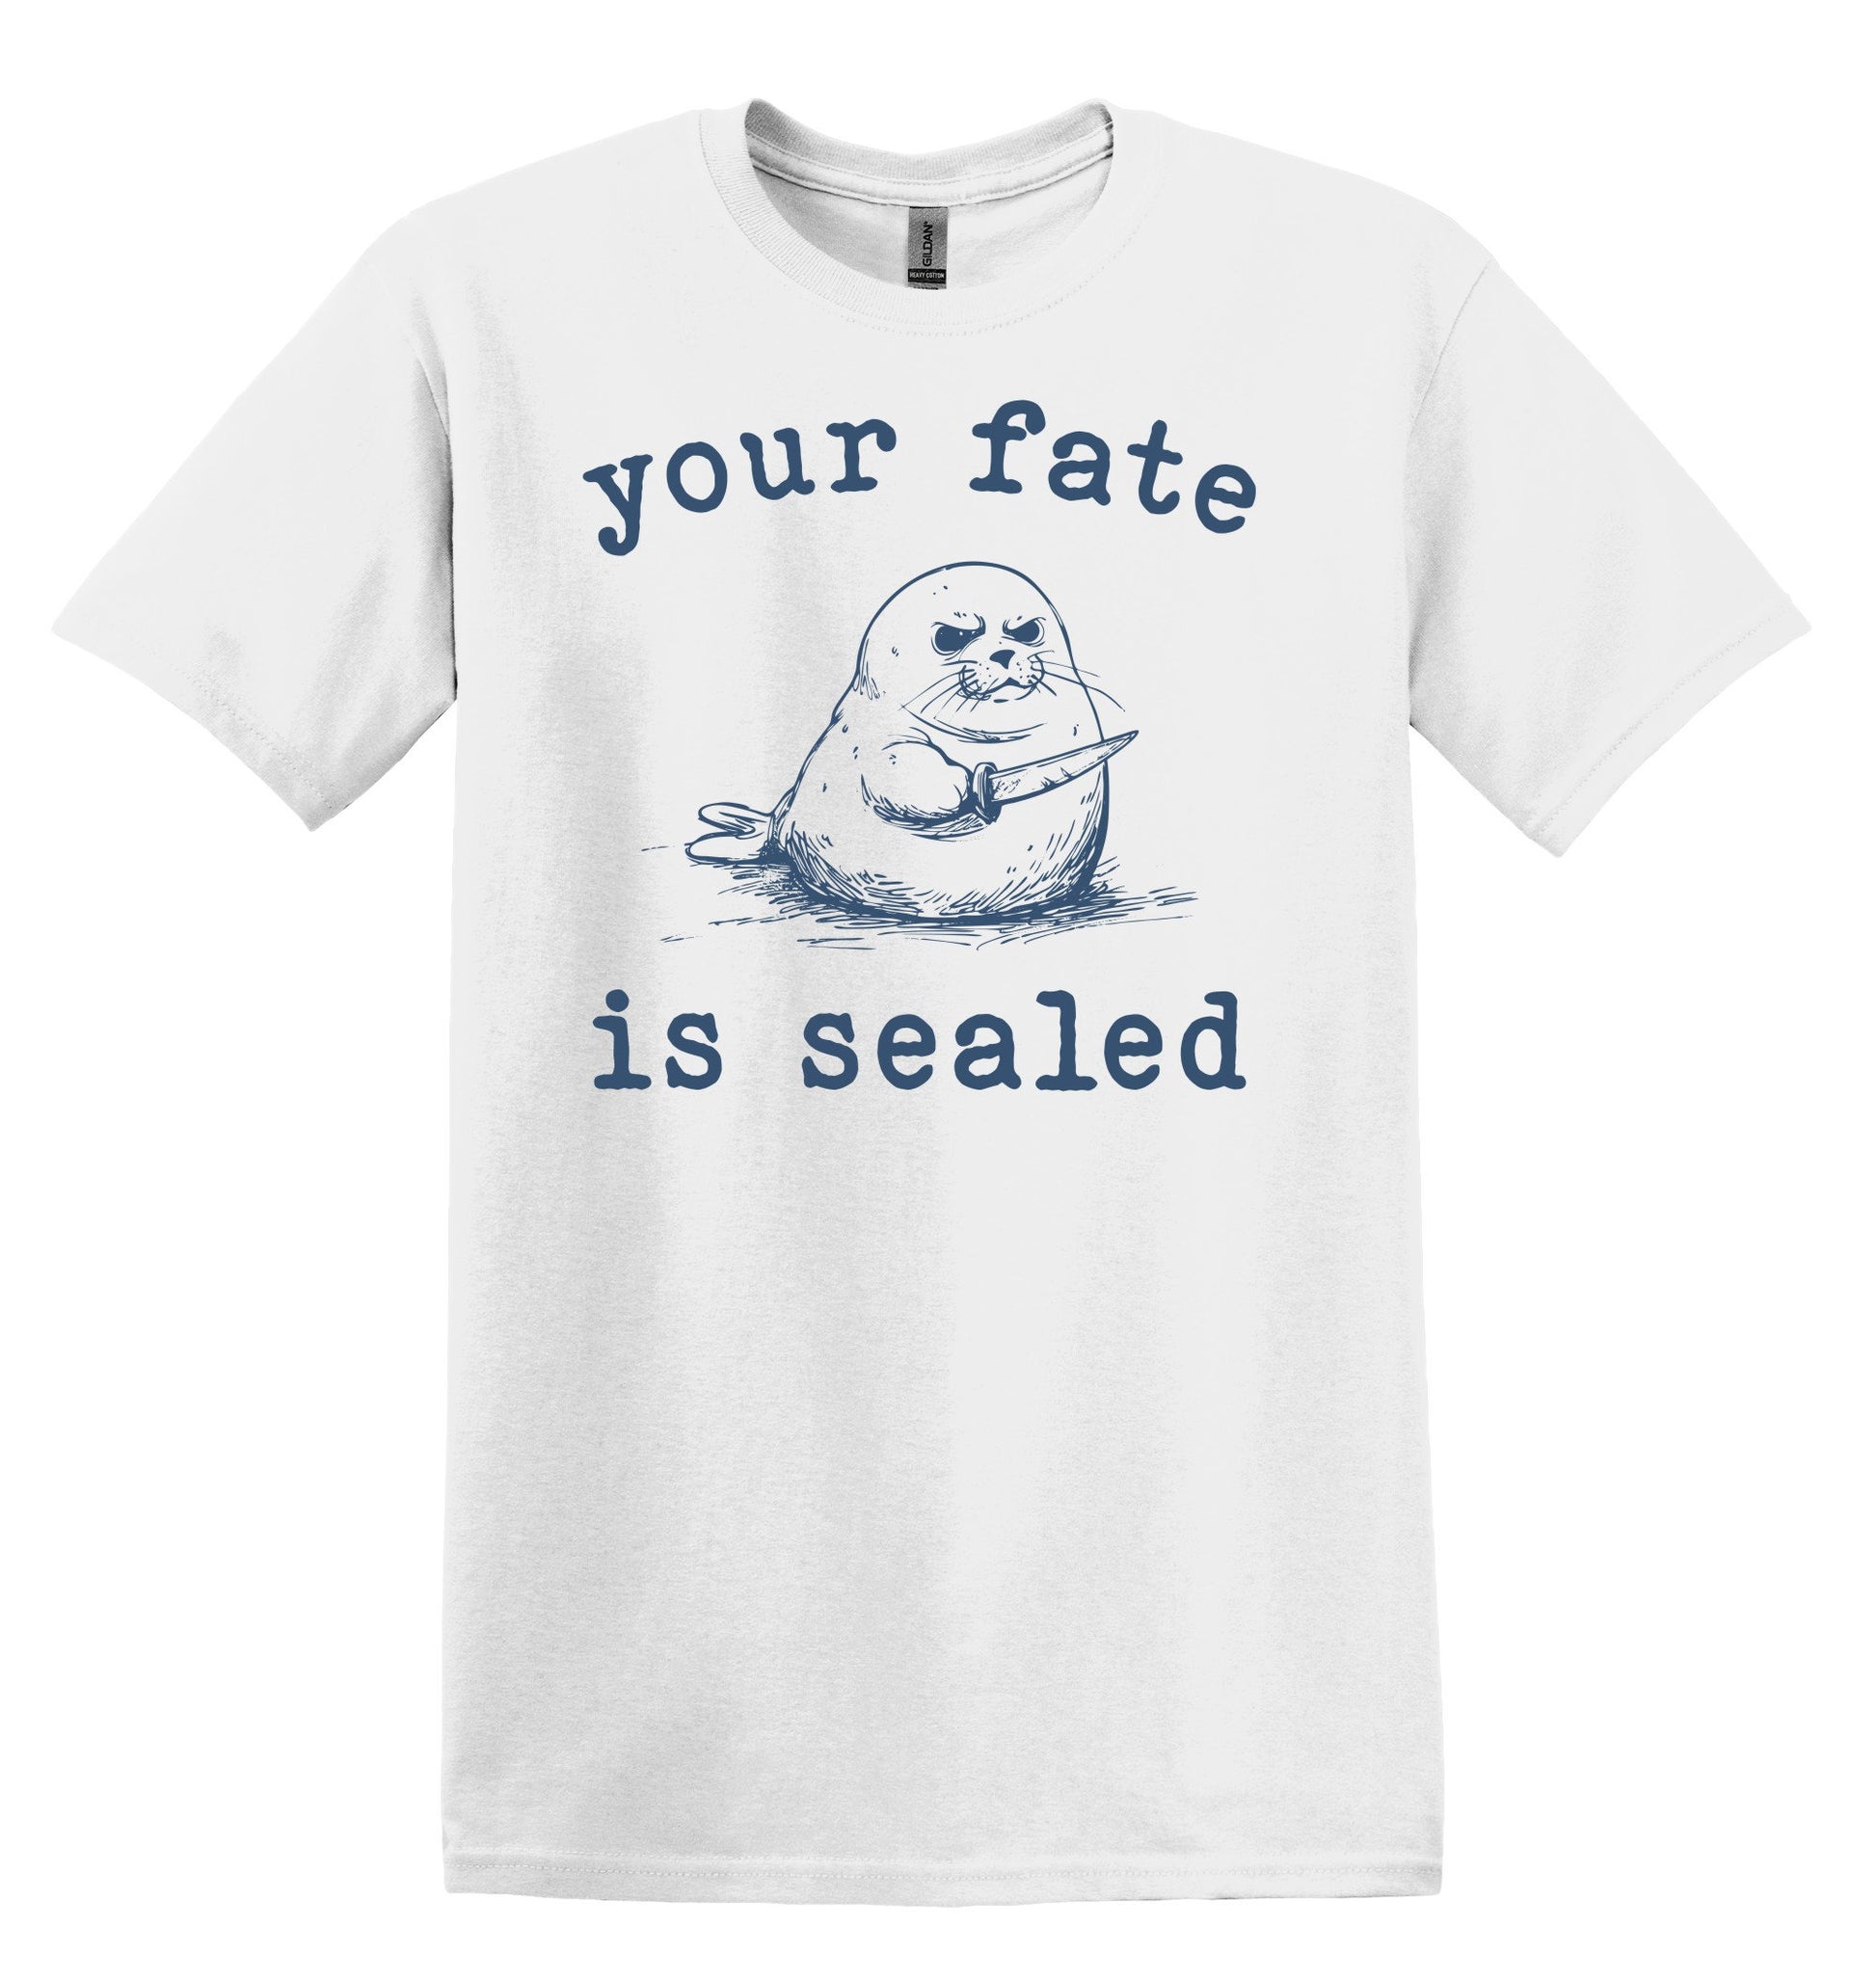 Your Fate is Sealed Shirt Graphic Shirt Funny Shirt Vintage Funny TShirt Nostalgia T-Shirt Relaxed Cotton Shirt Meme Shirt Minimalist Shirt